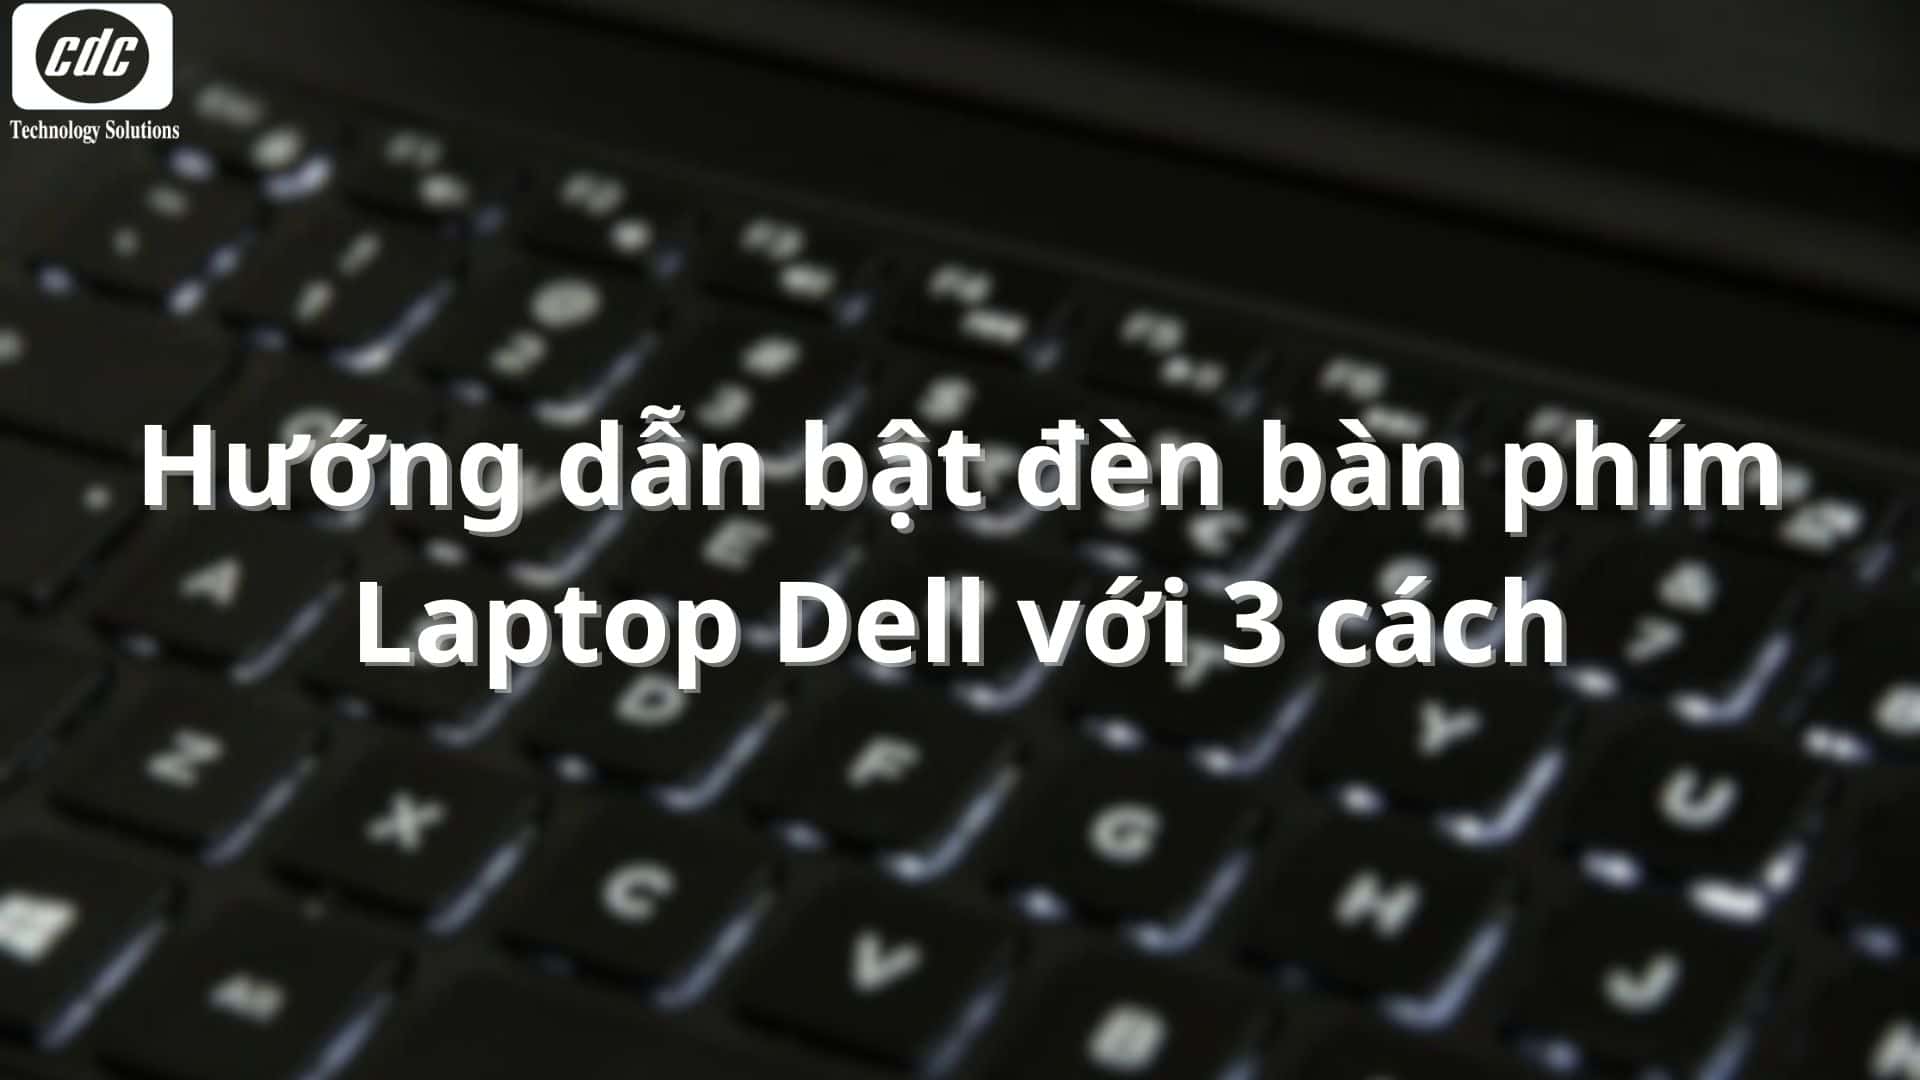 bat-den-ban-phim-laptop-dell-01